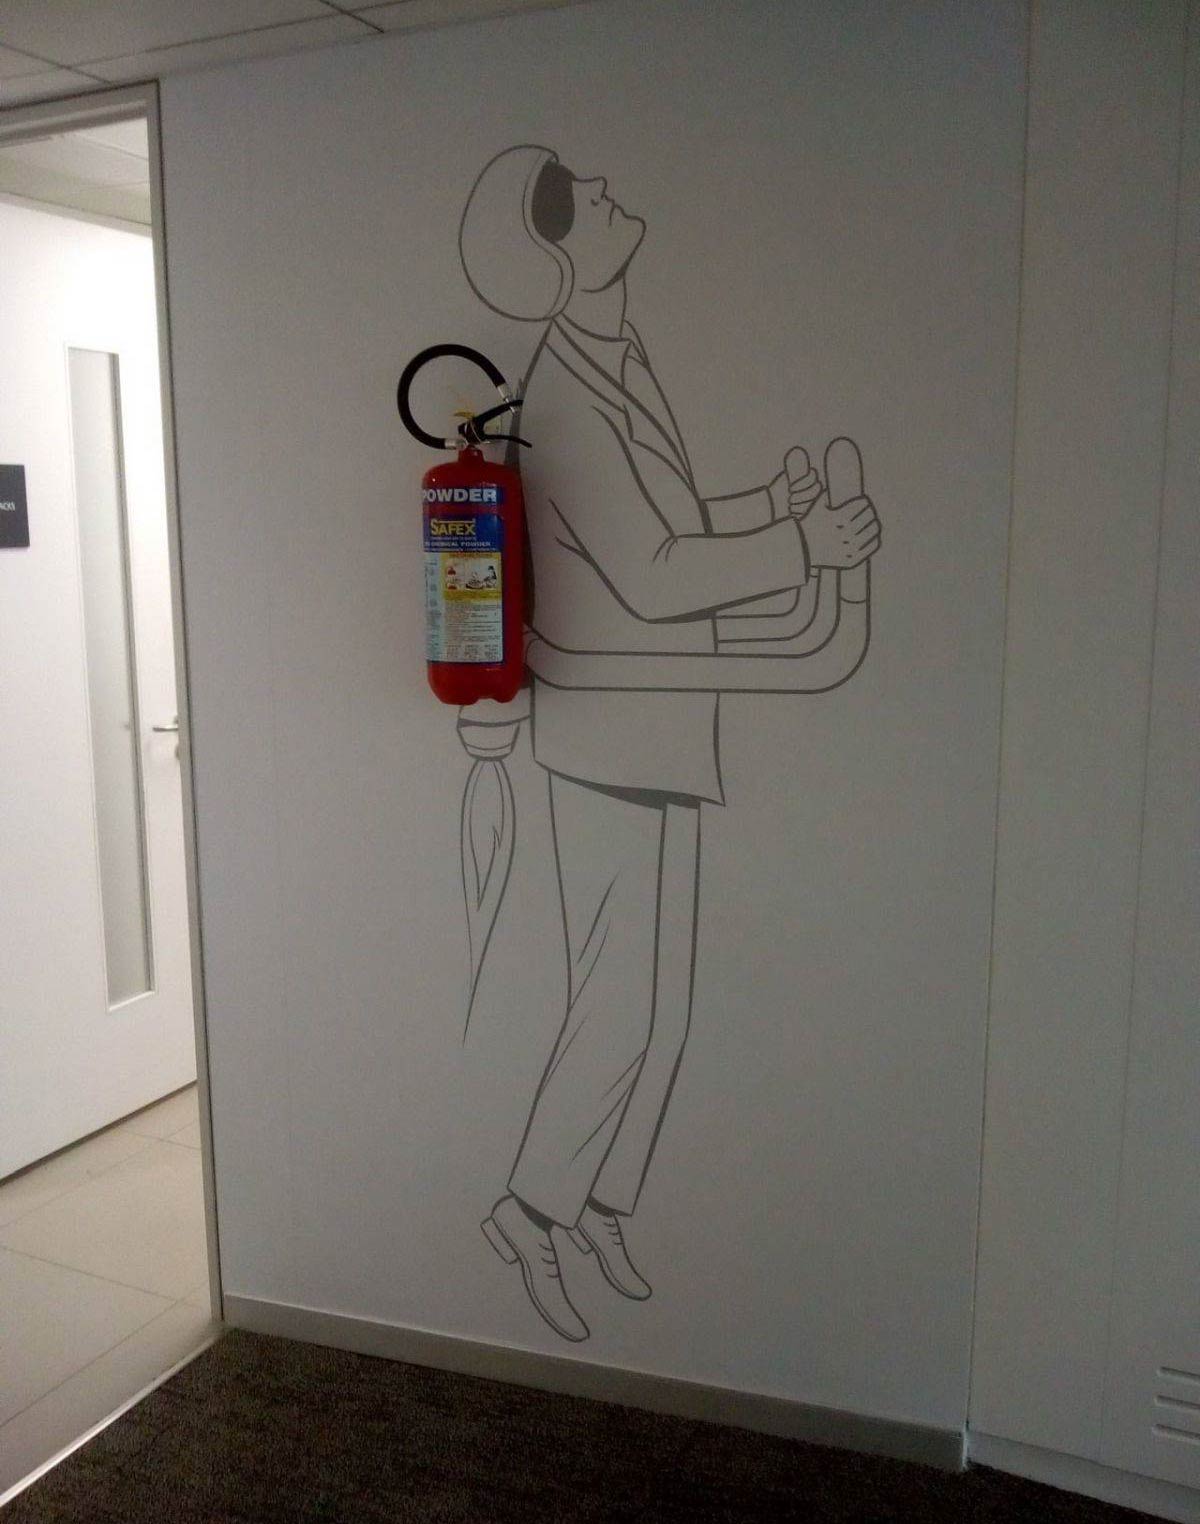 Fire extinguisher wall art